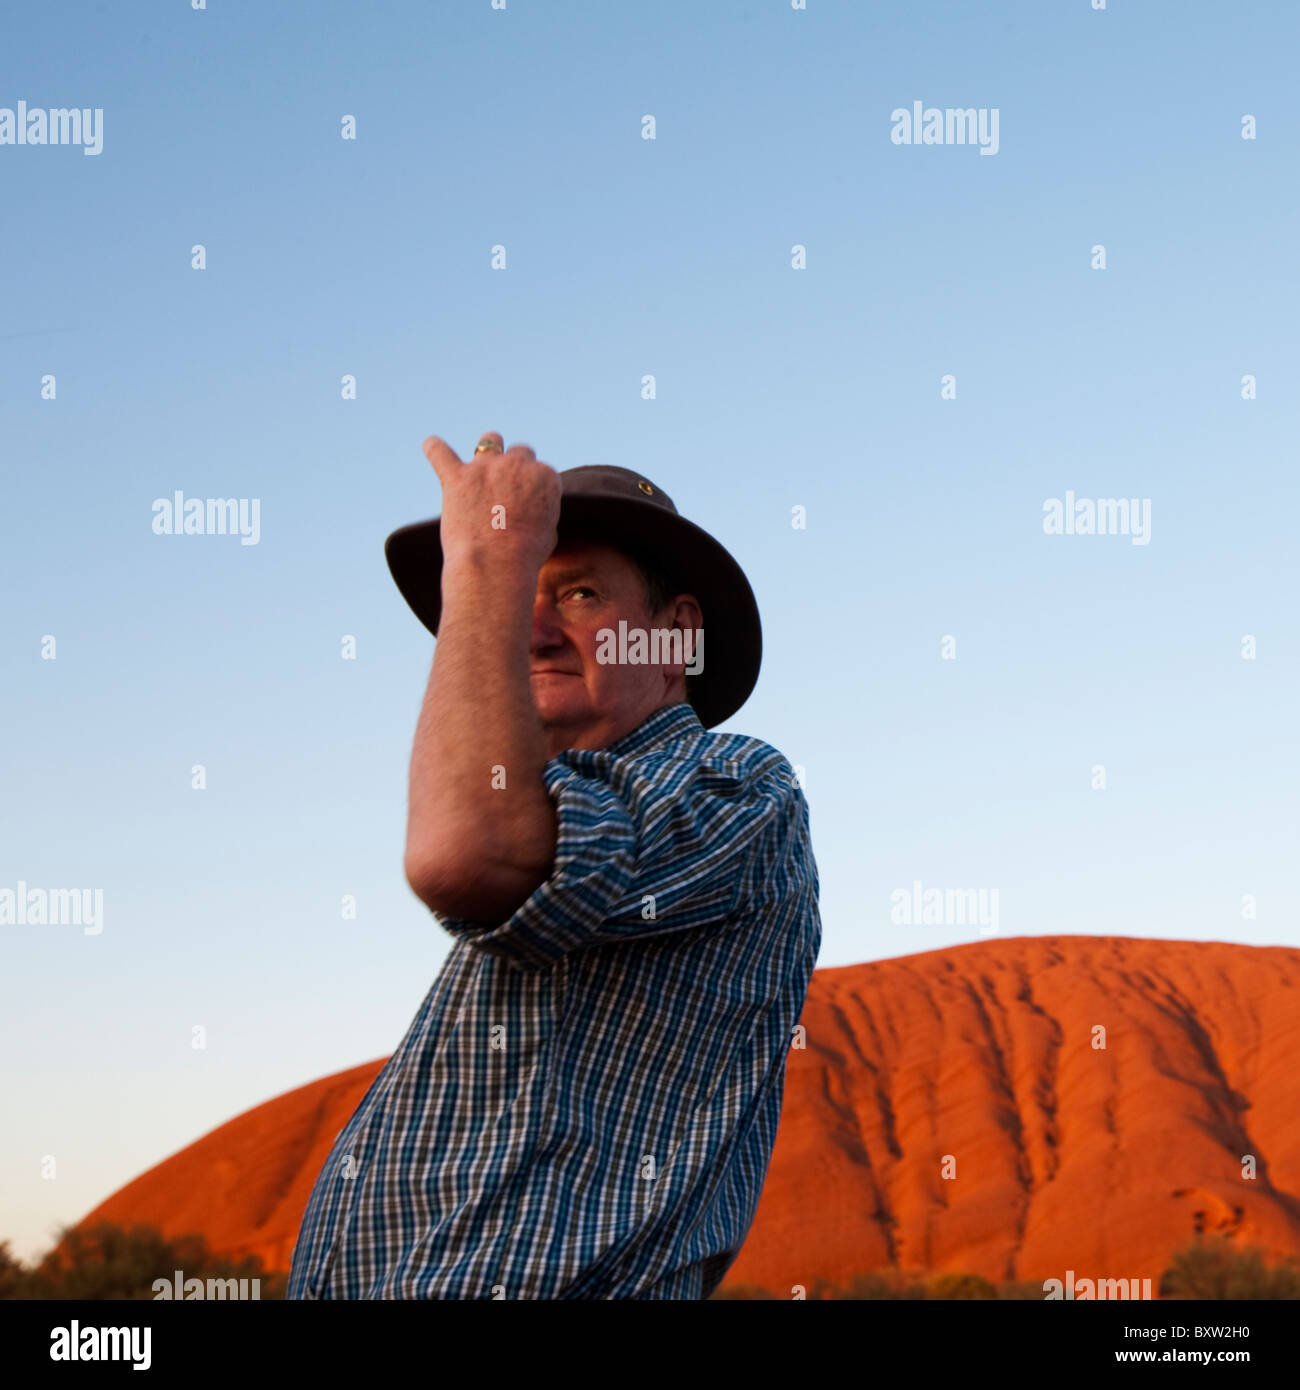 Australien-Northern Territory Uluru - Kata Tjuta National Park touristische Tipps Cowboyhut bei Sonnenaufgang am Ayers Rock am Sommermorgen Stockfoto